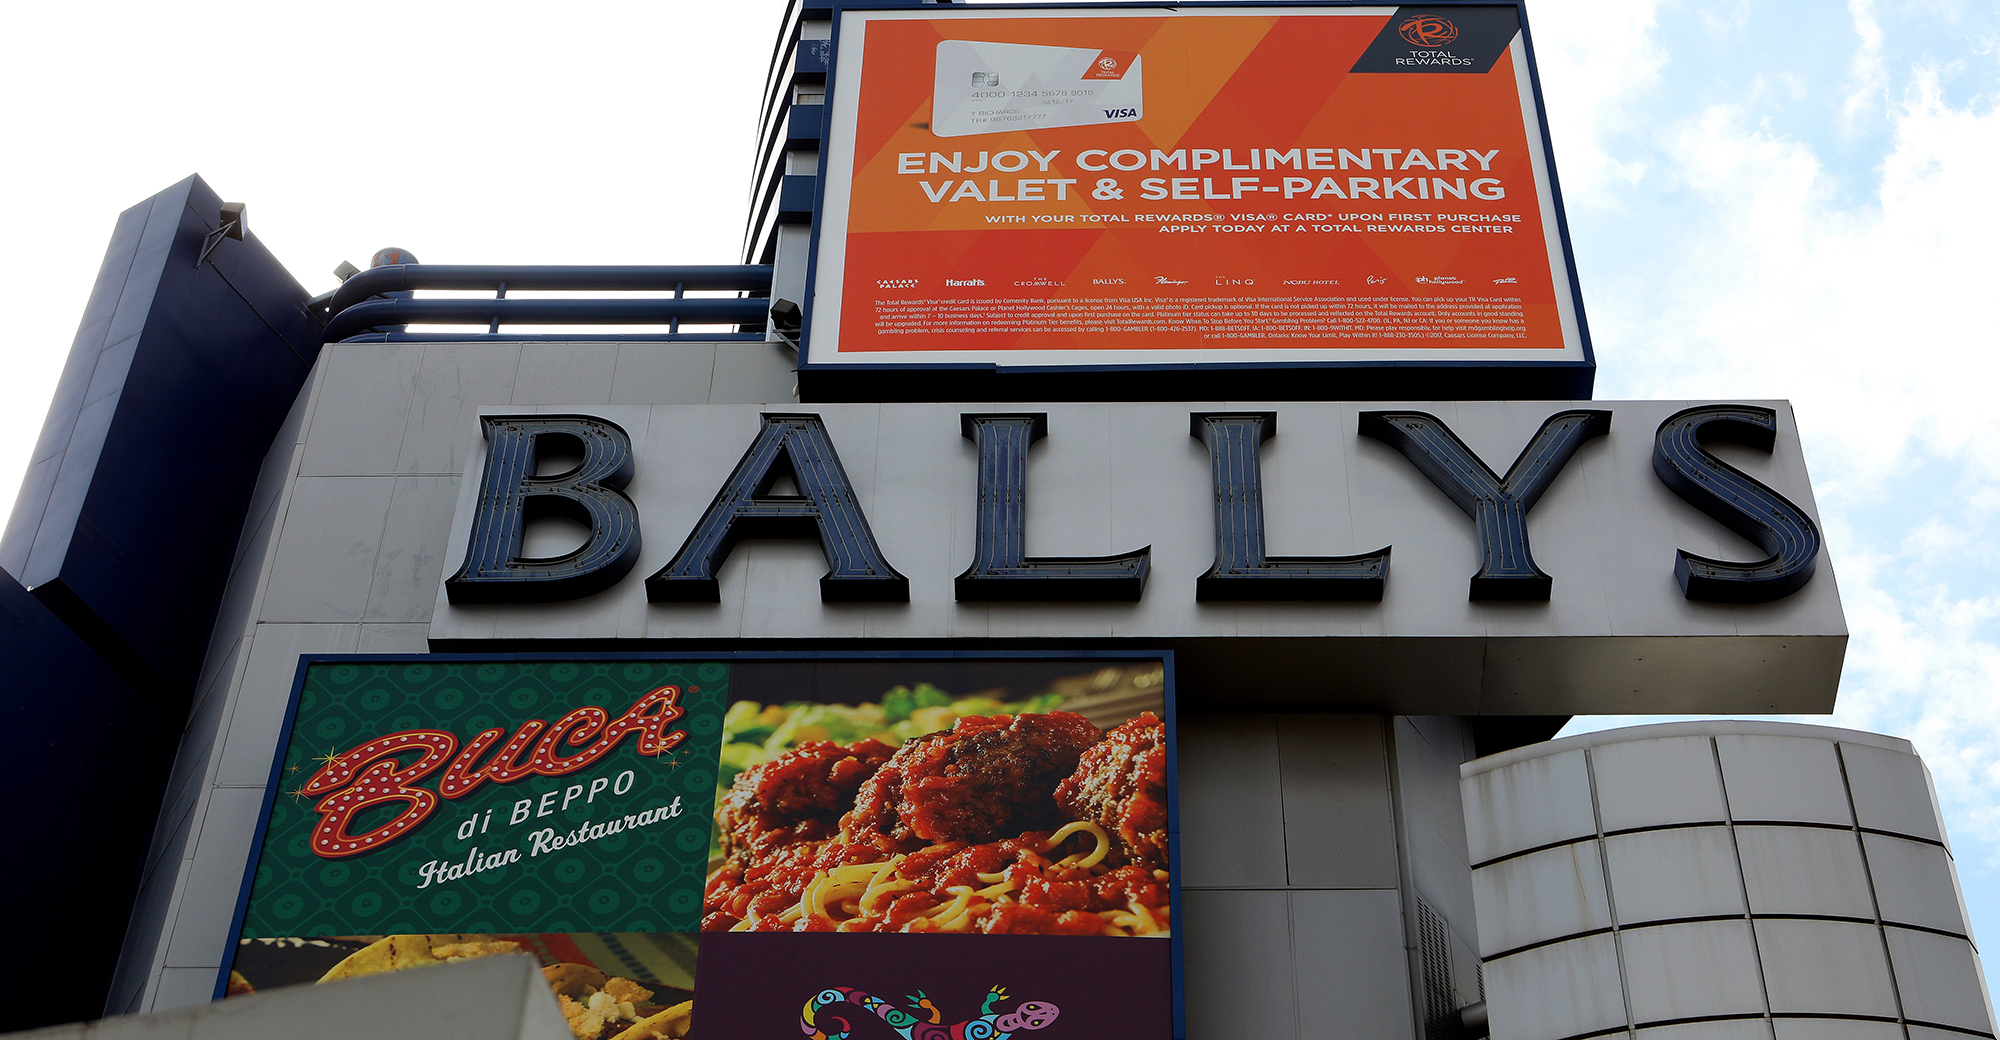 Bally’s Lenders Faucet Attorneys in Effort to Block Sale-Leaseback